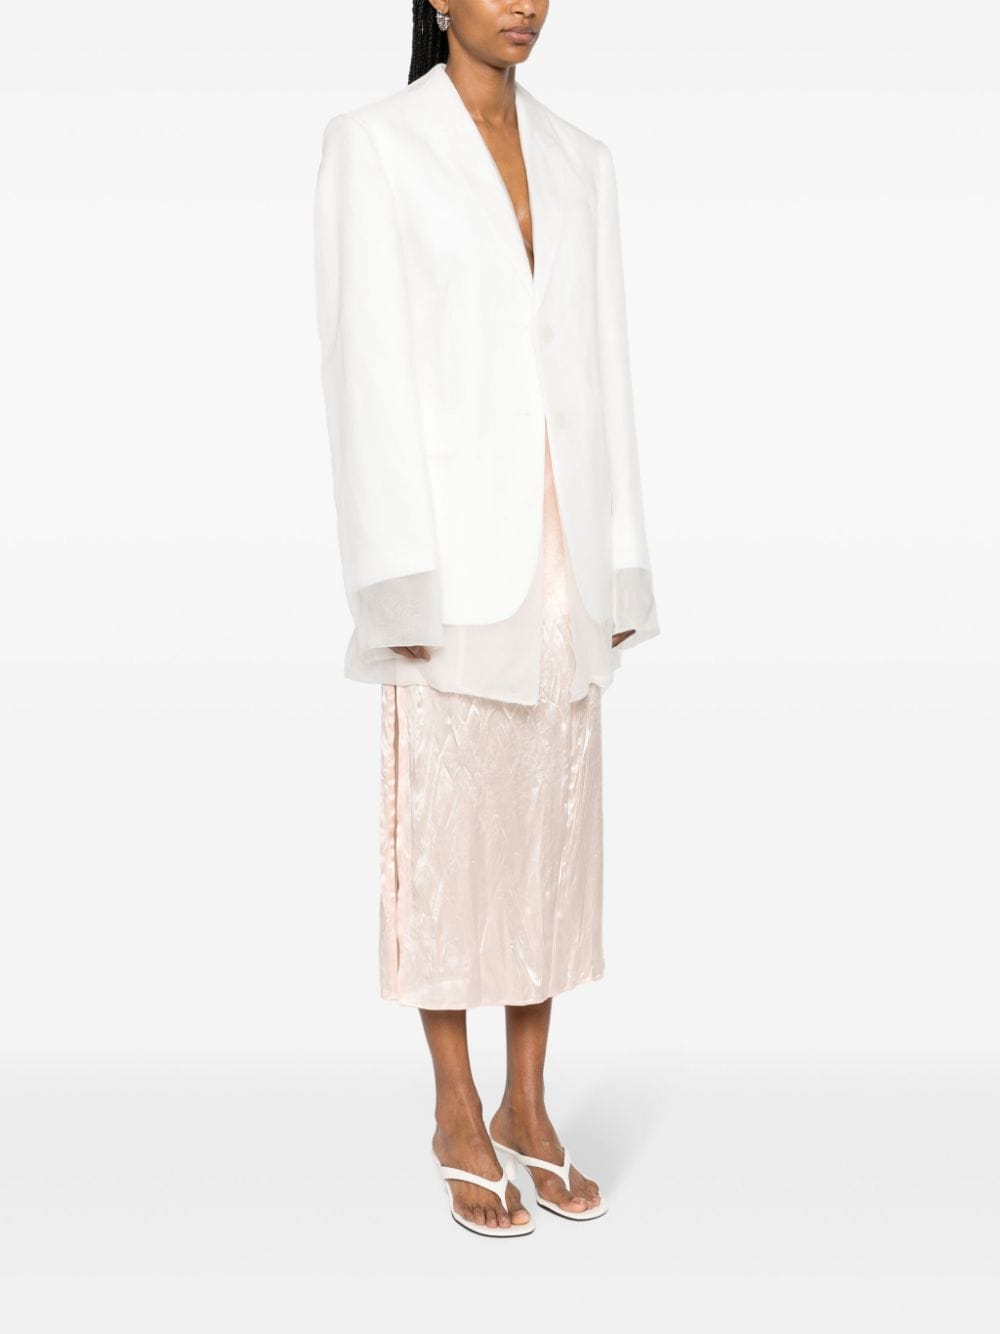 MAX MARA SPORTMAX Elegant White Silk Jacket for Women - SS24 Collection